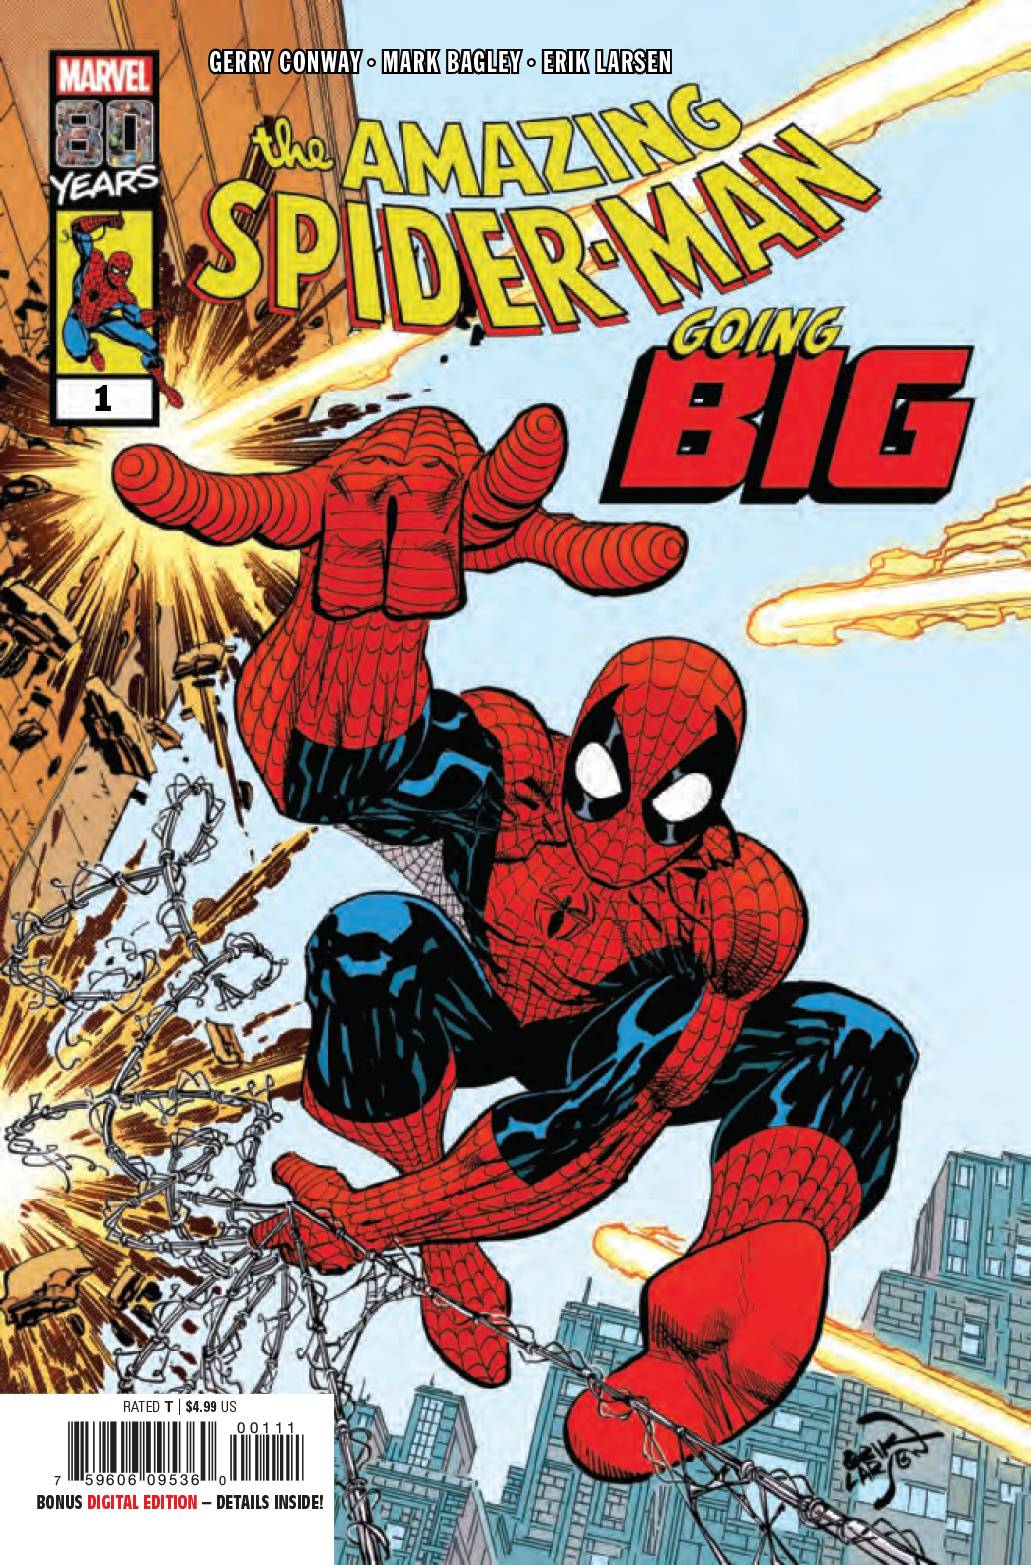 AMAZING SPIDER-MAN GOING BIG #1